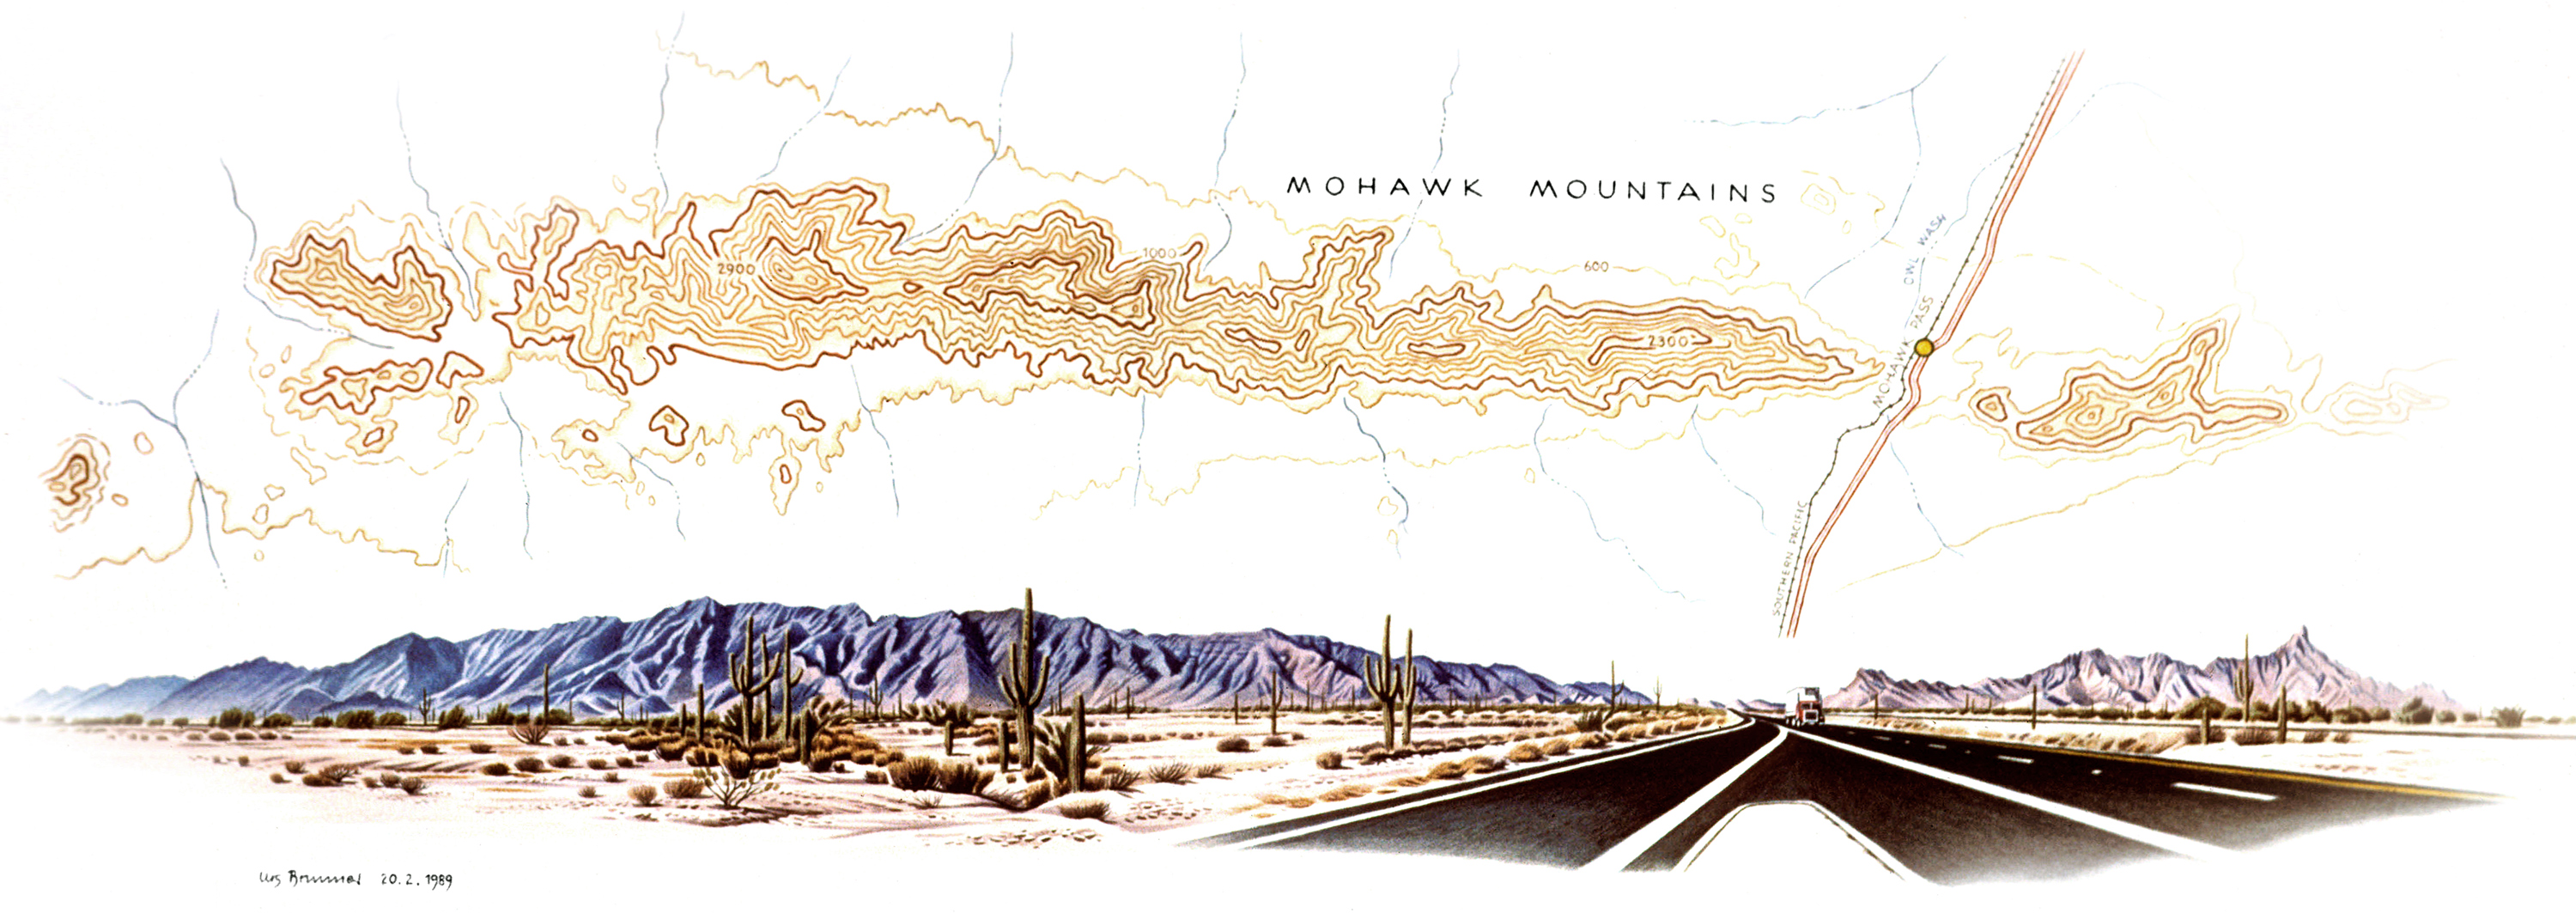 Topographie ll / Mohawk Mountains, 1989, Aquarell und Farbstift auf Papier, 54 x 73 cm